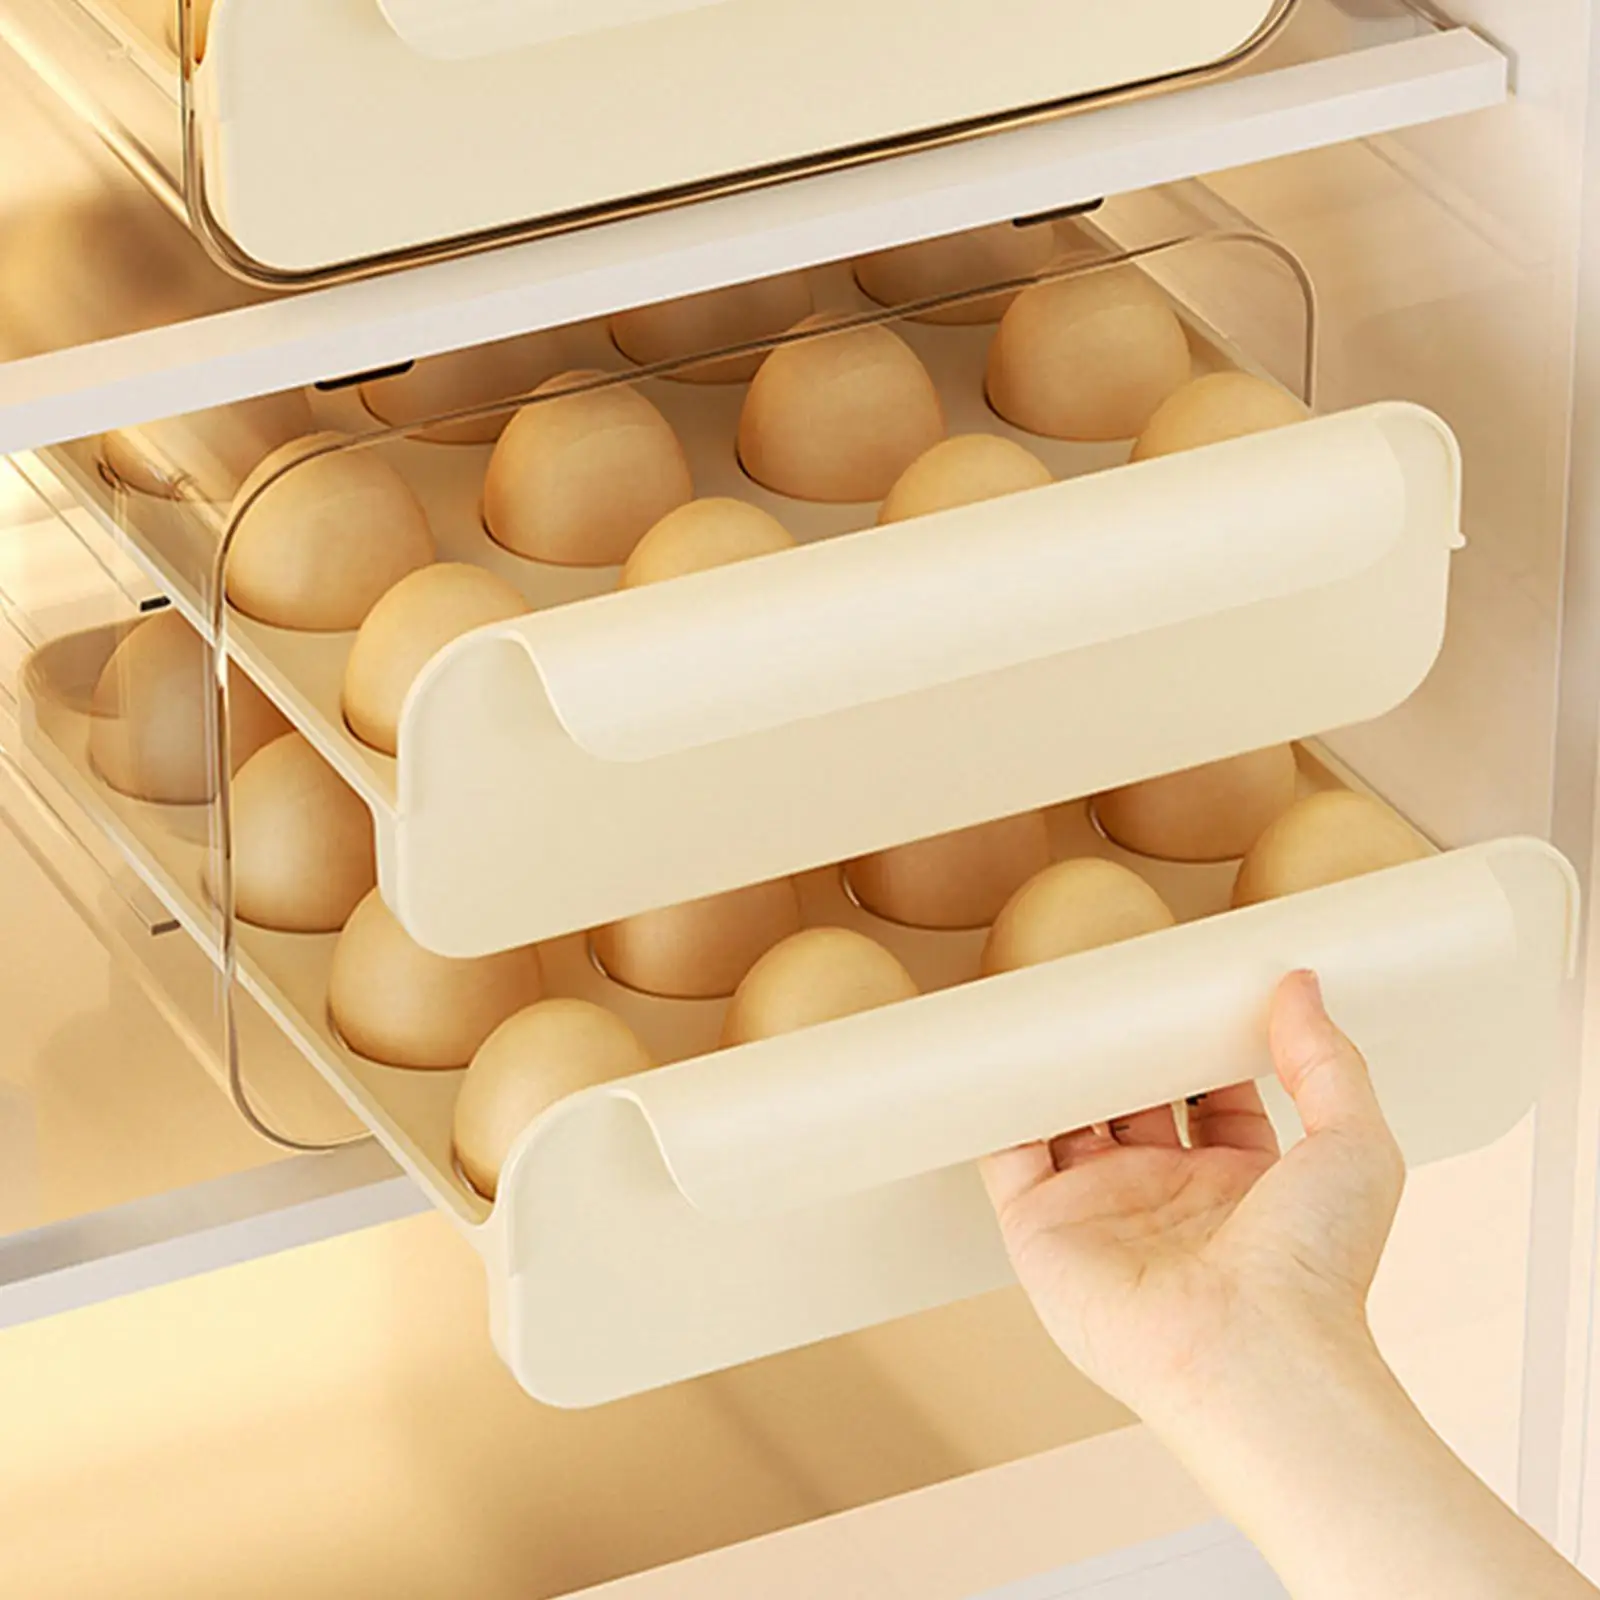 Egg Holder Tray Holds 32 Eggs Fridge Egg Drawer Organizer Bins Eggs Storage Tray for Cupboard Countertop Kitchen Cabinet